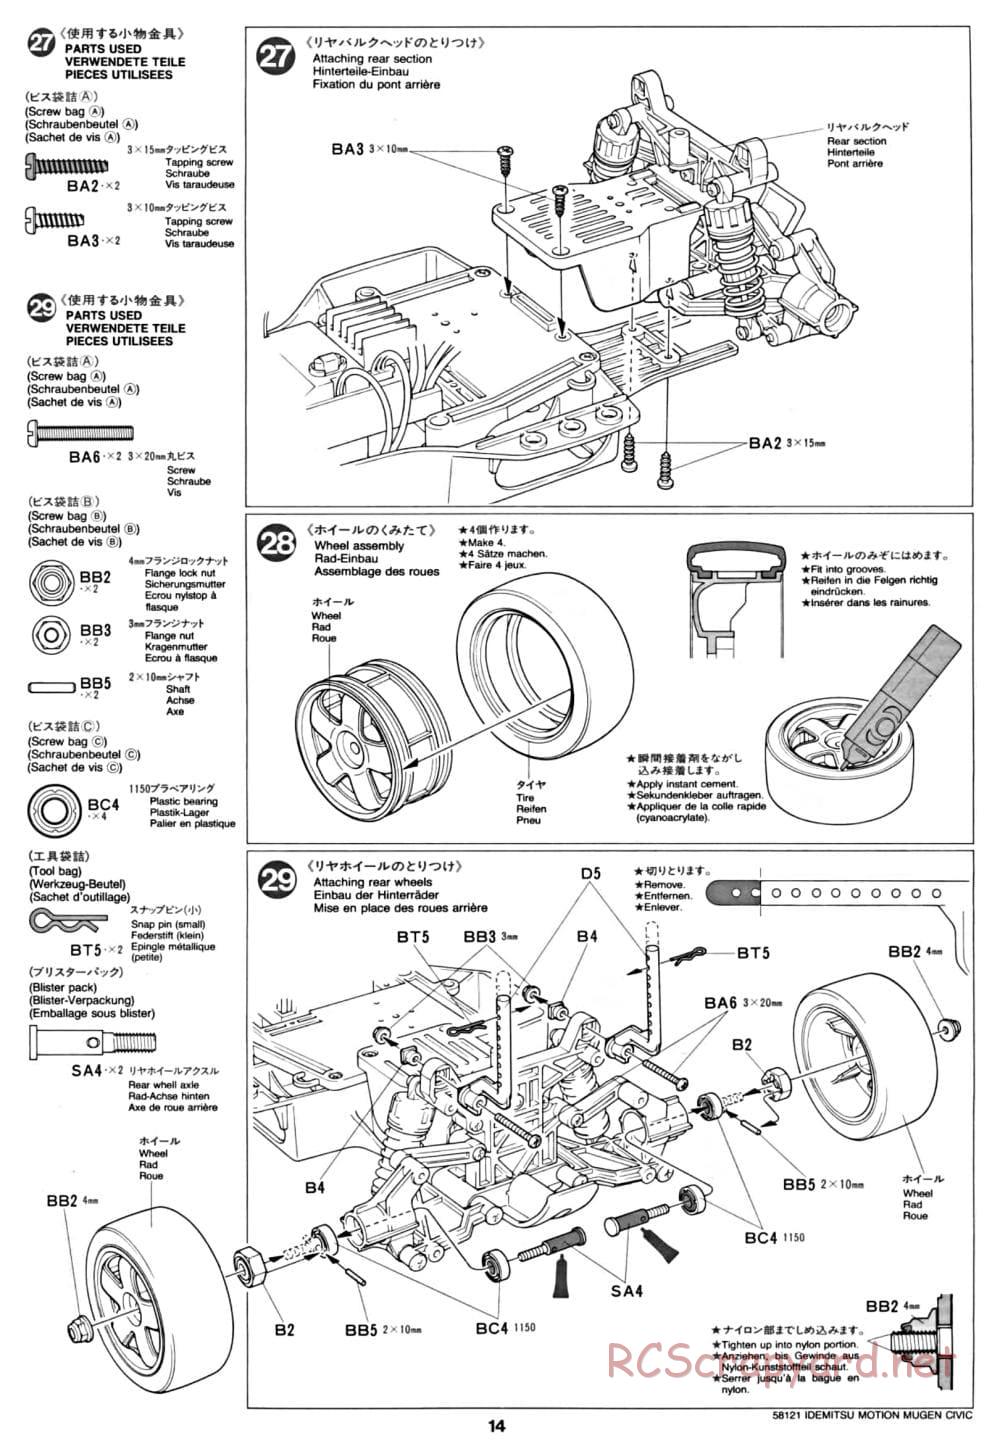 Tamiya - Idemitsu Motion Mugen Civic - FF-01 Chassis - Manual - Page 14